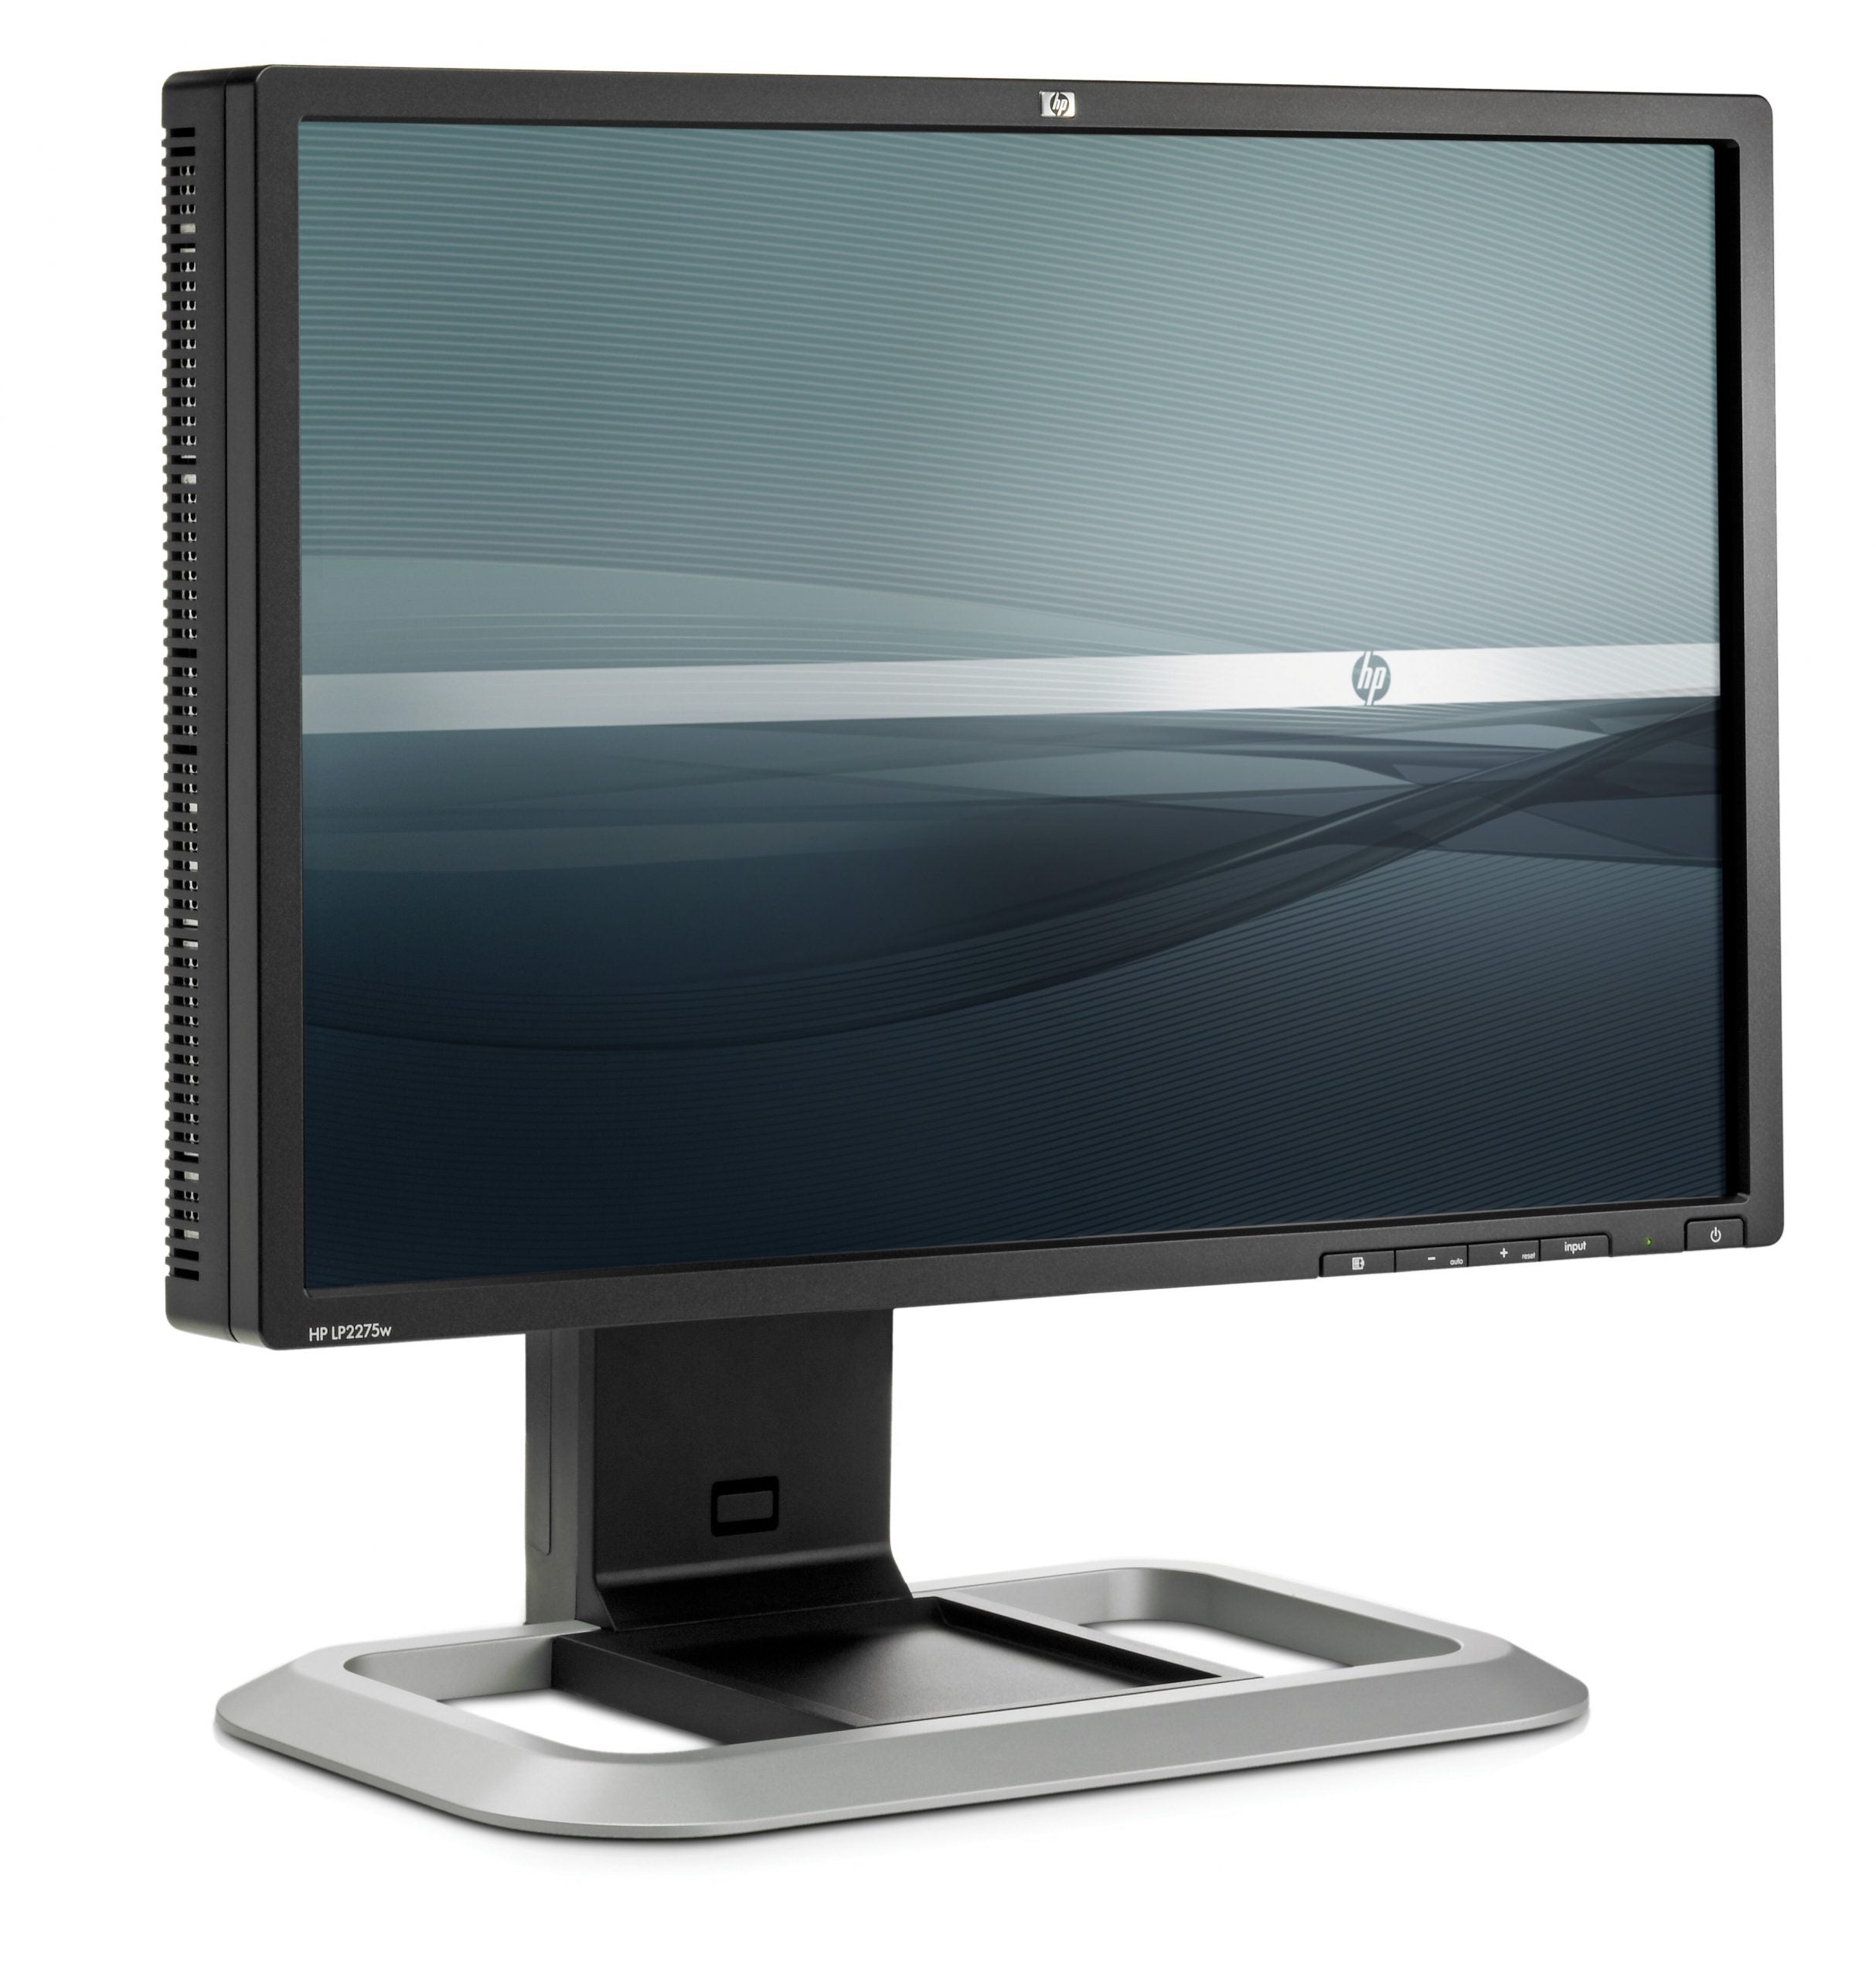 HP LP2275w Monitor LCD PVA 22